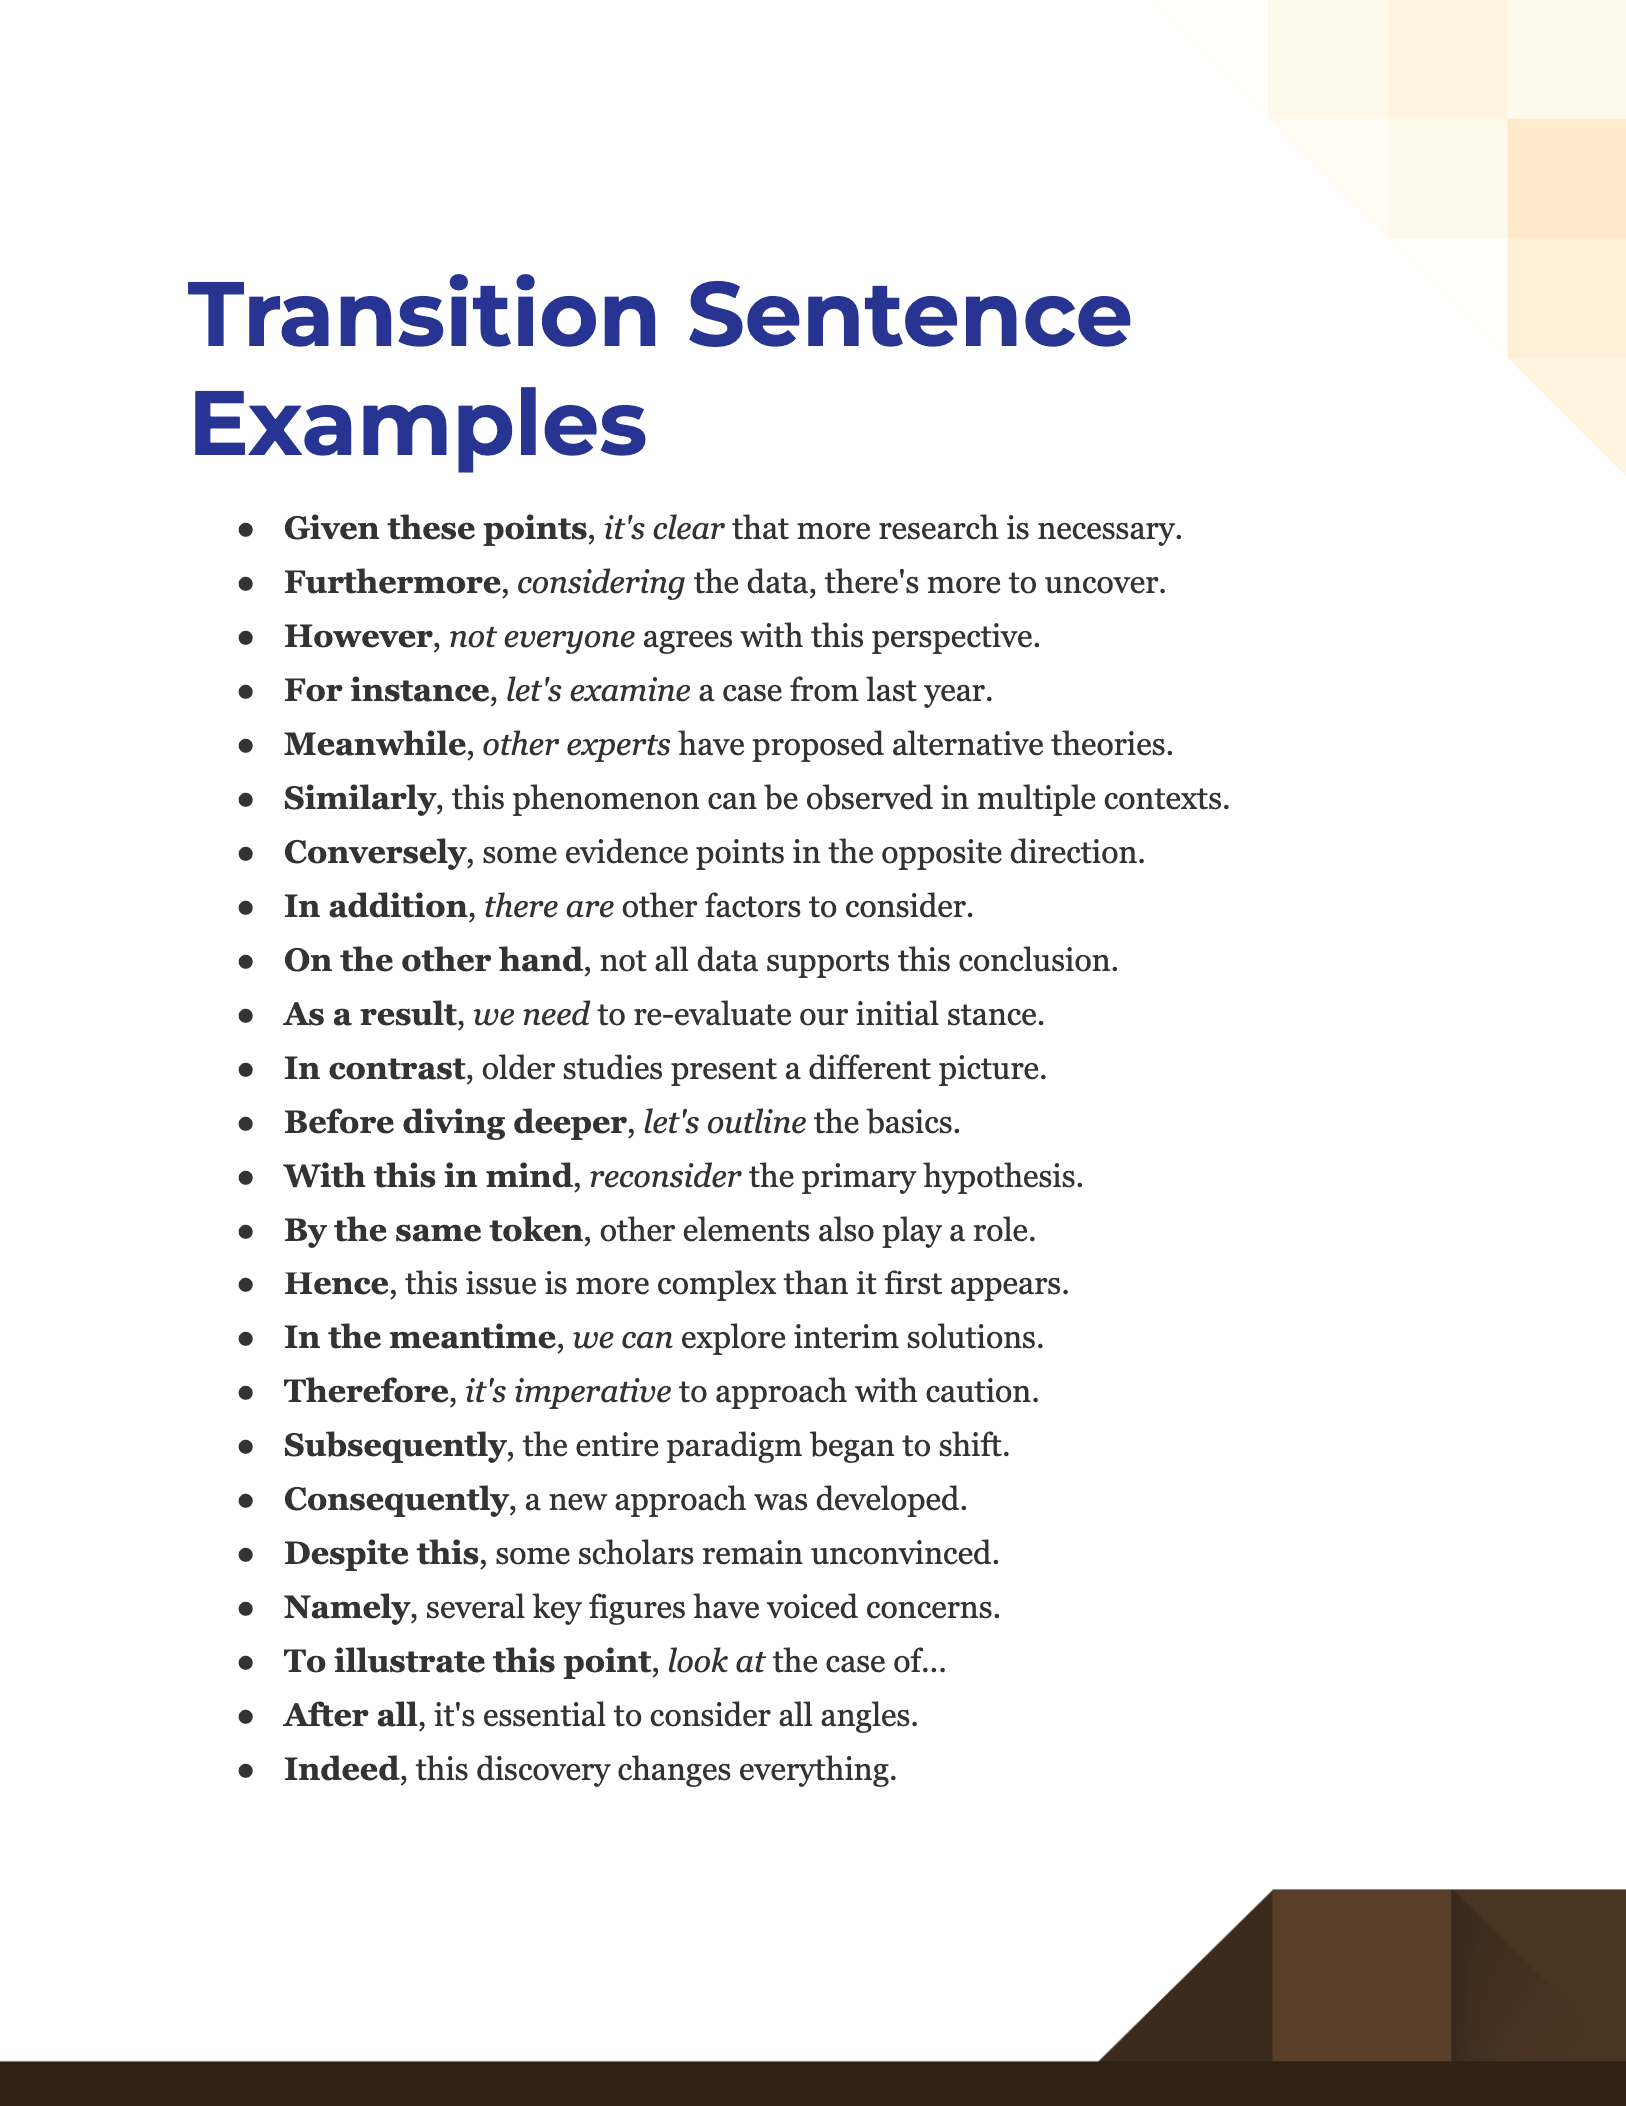 transition sentence in a speech